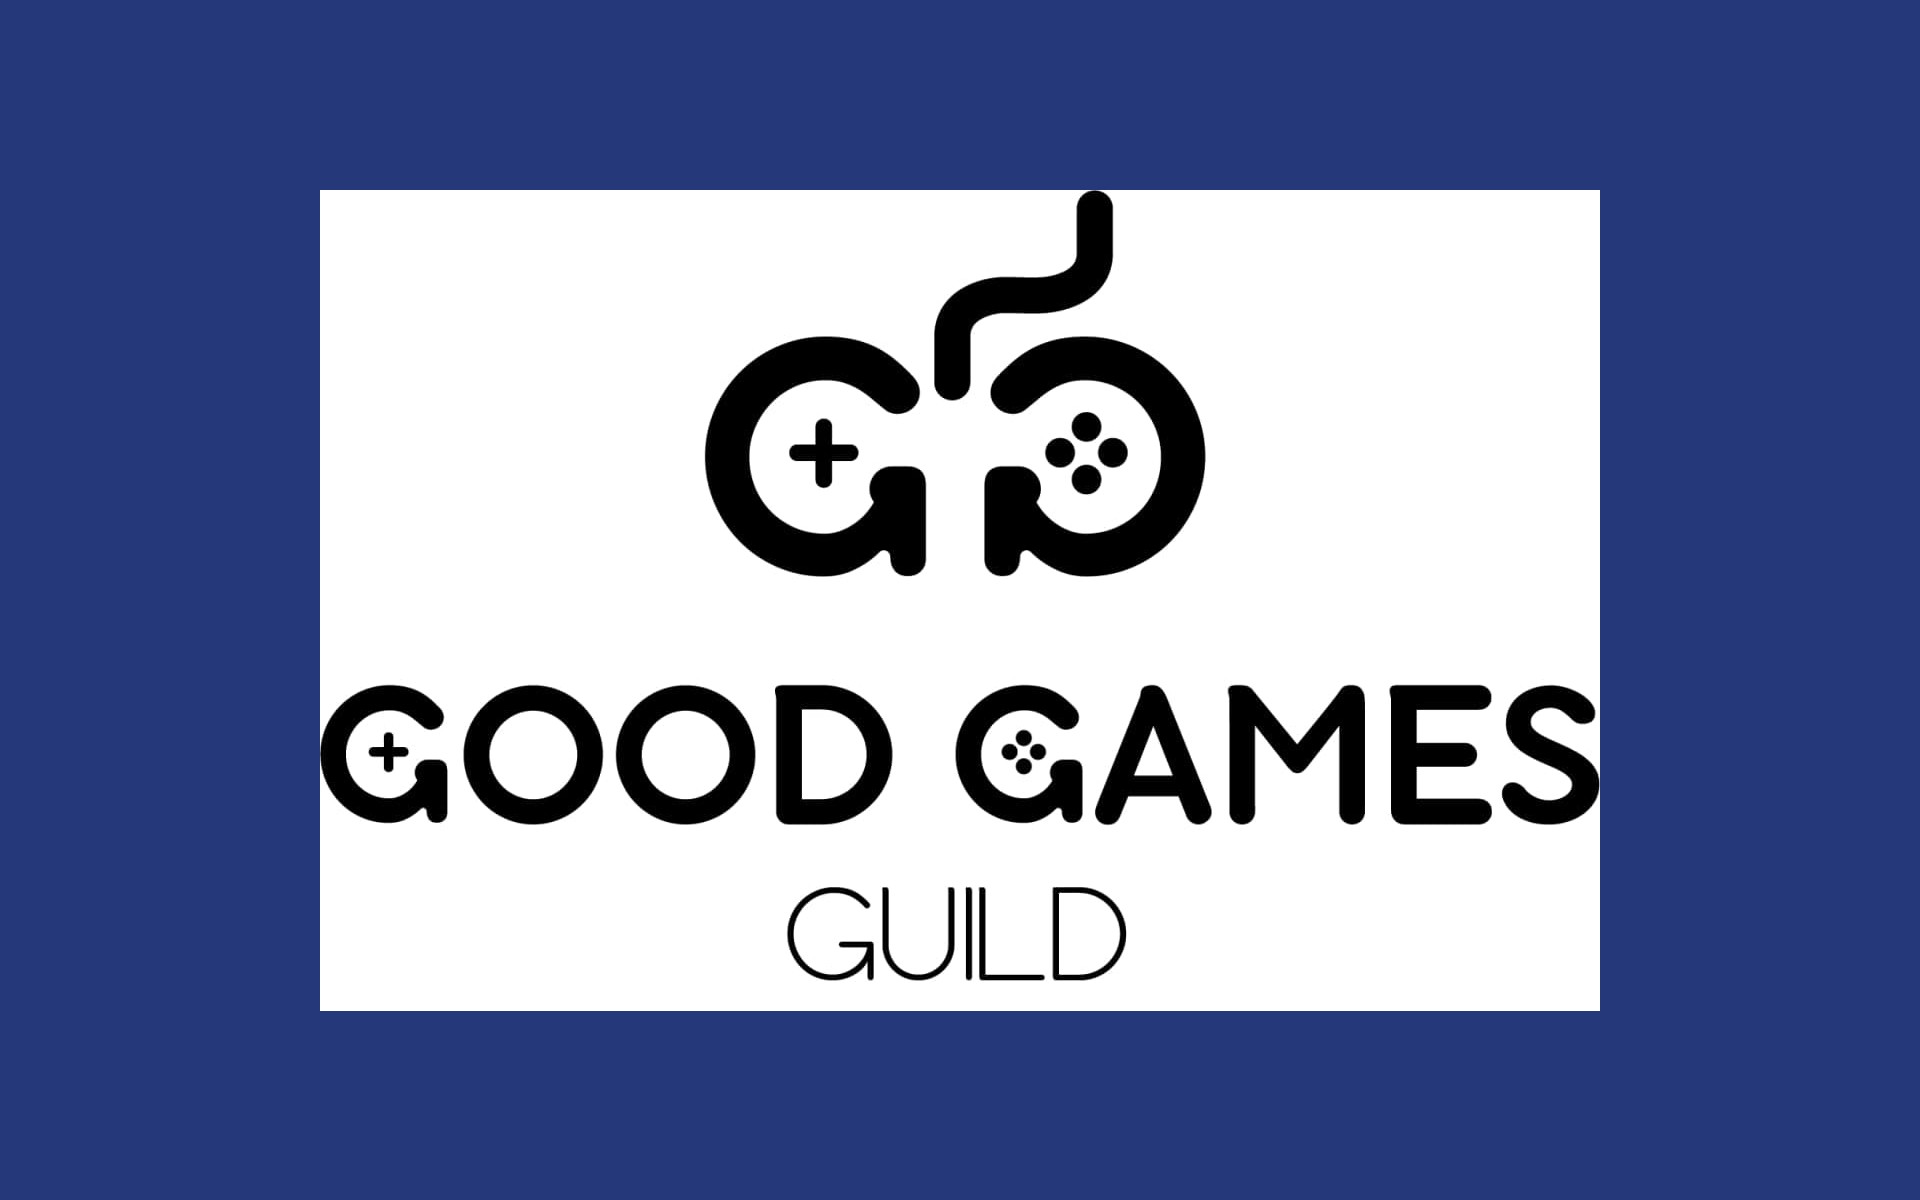 Good games guild